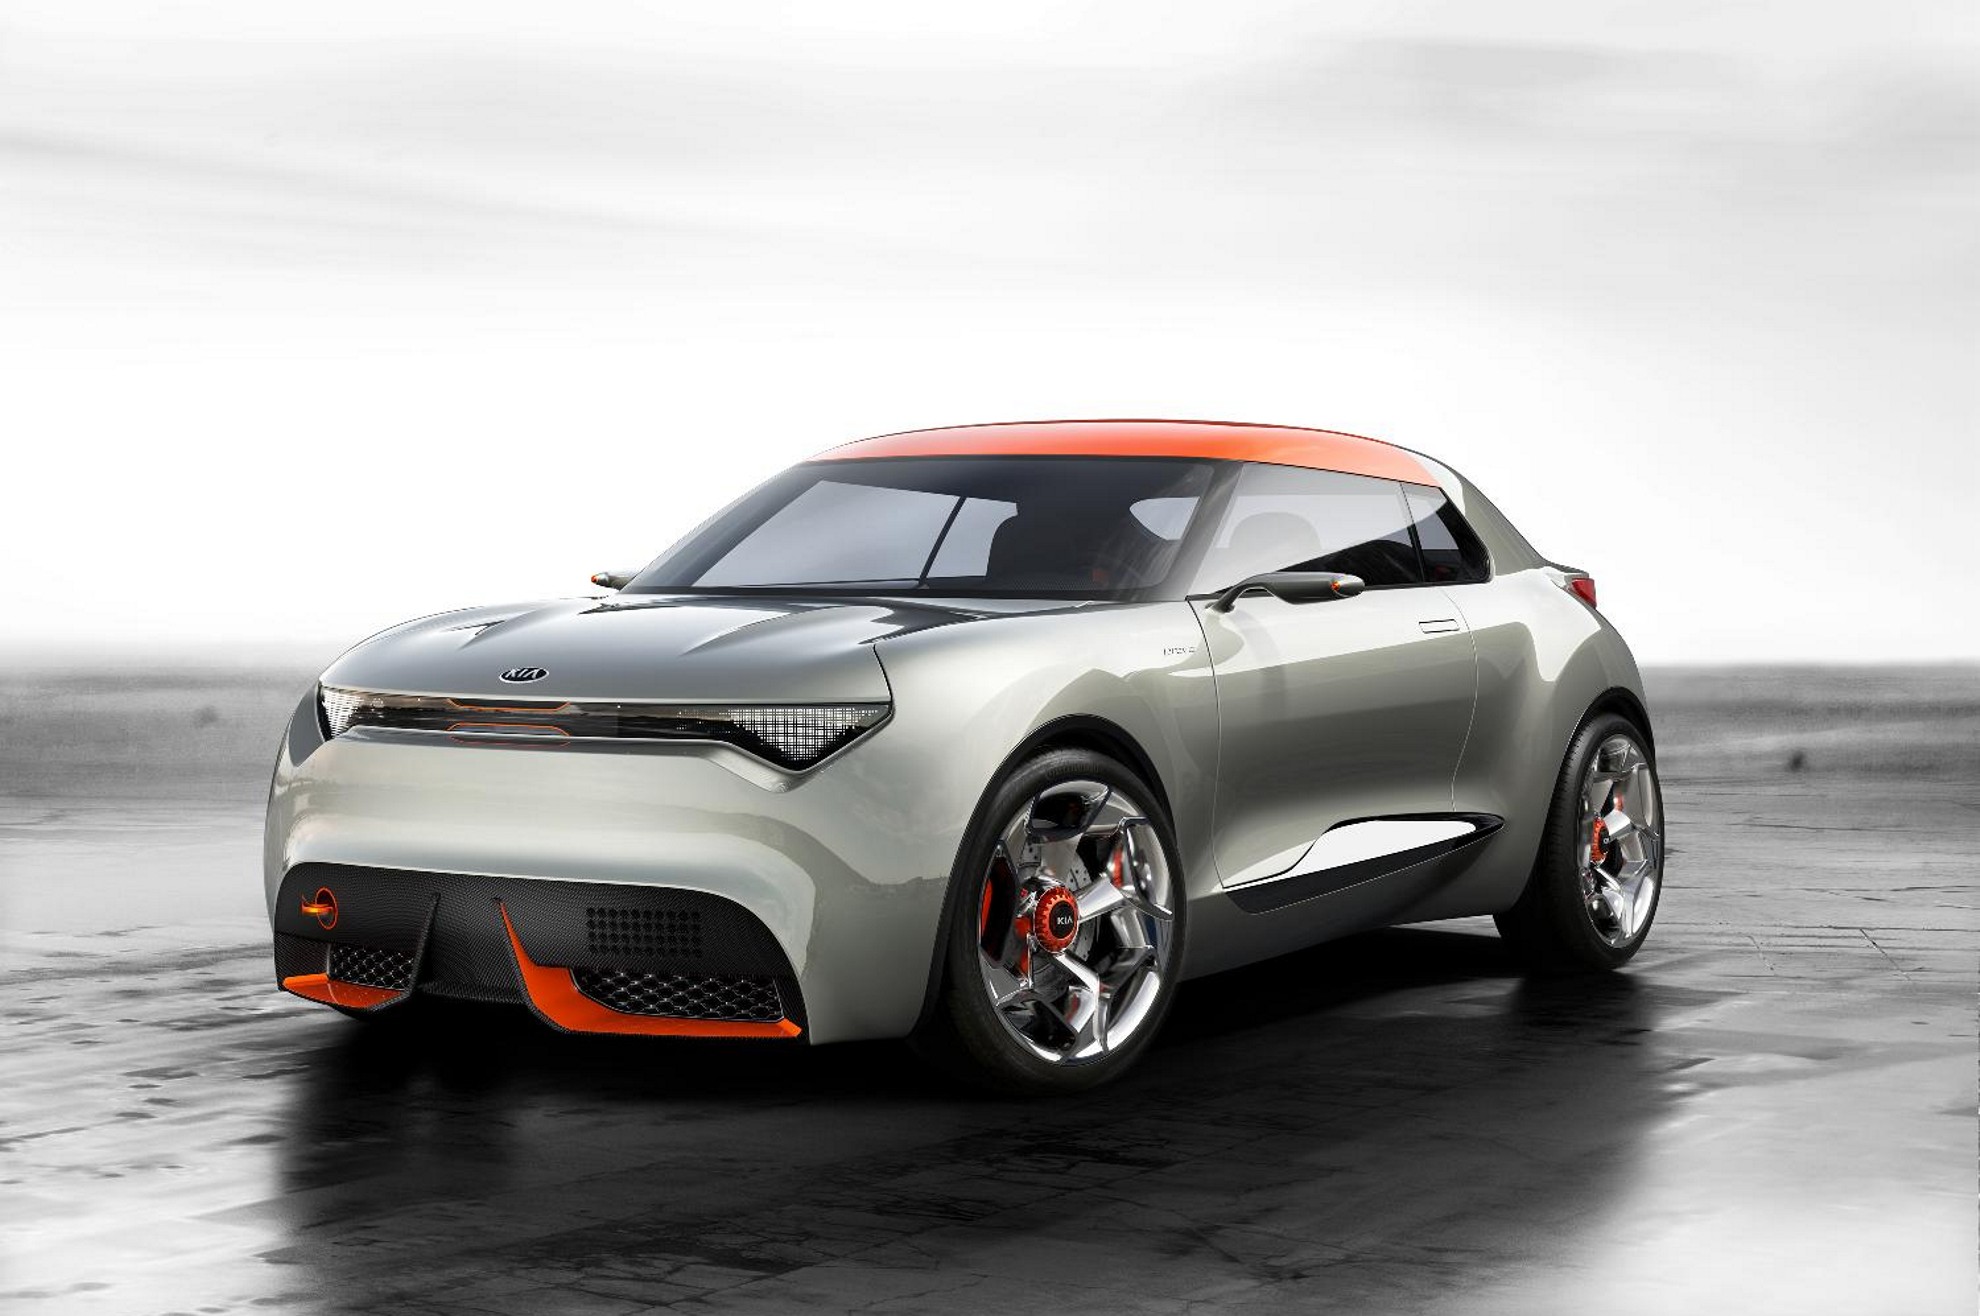 KIA Geneva Motor Show 2013 – Radical Provo Concept Car